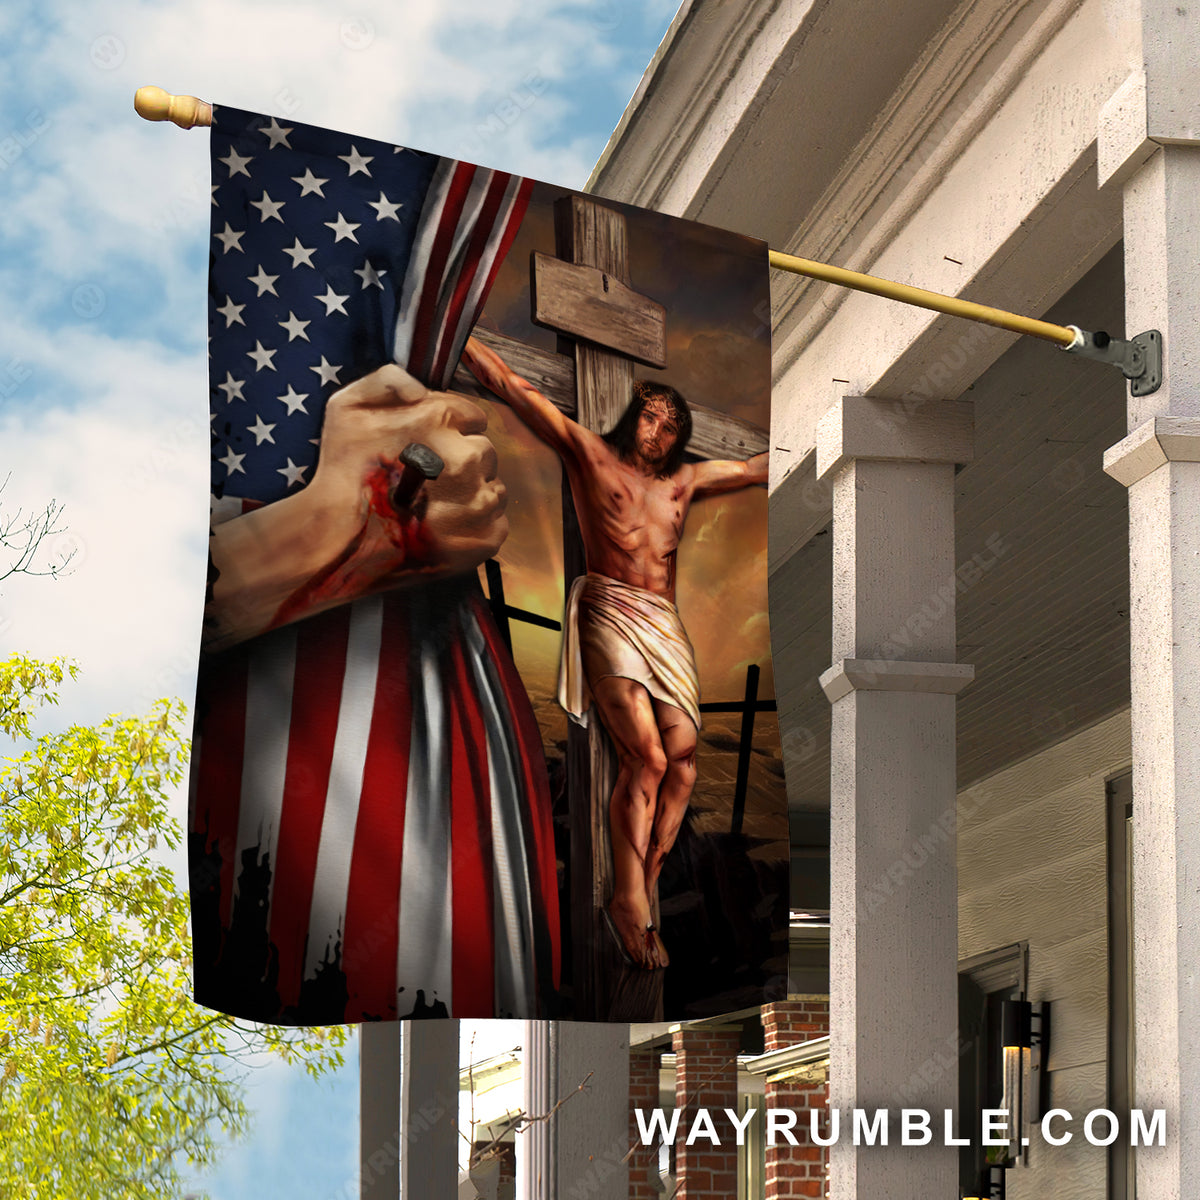 Jesus on the cross drawing, Jesus hand, US flag, Sunset painting ...